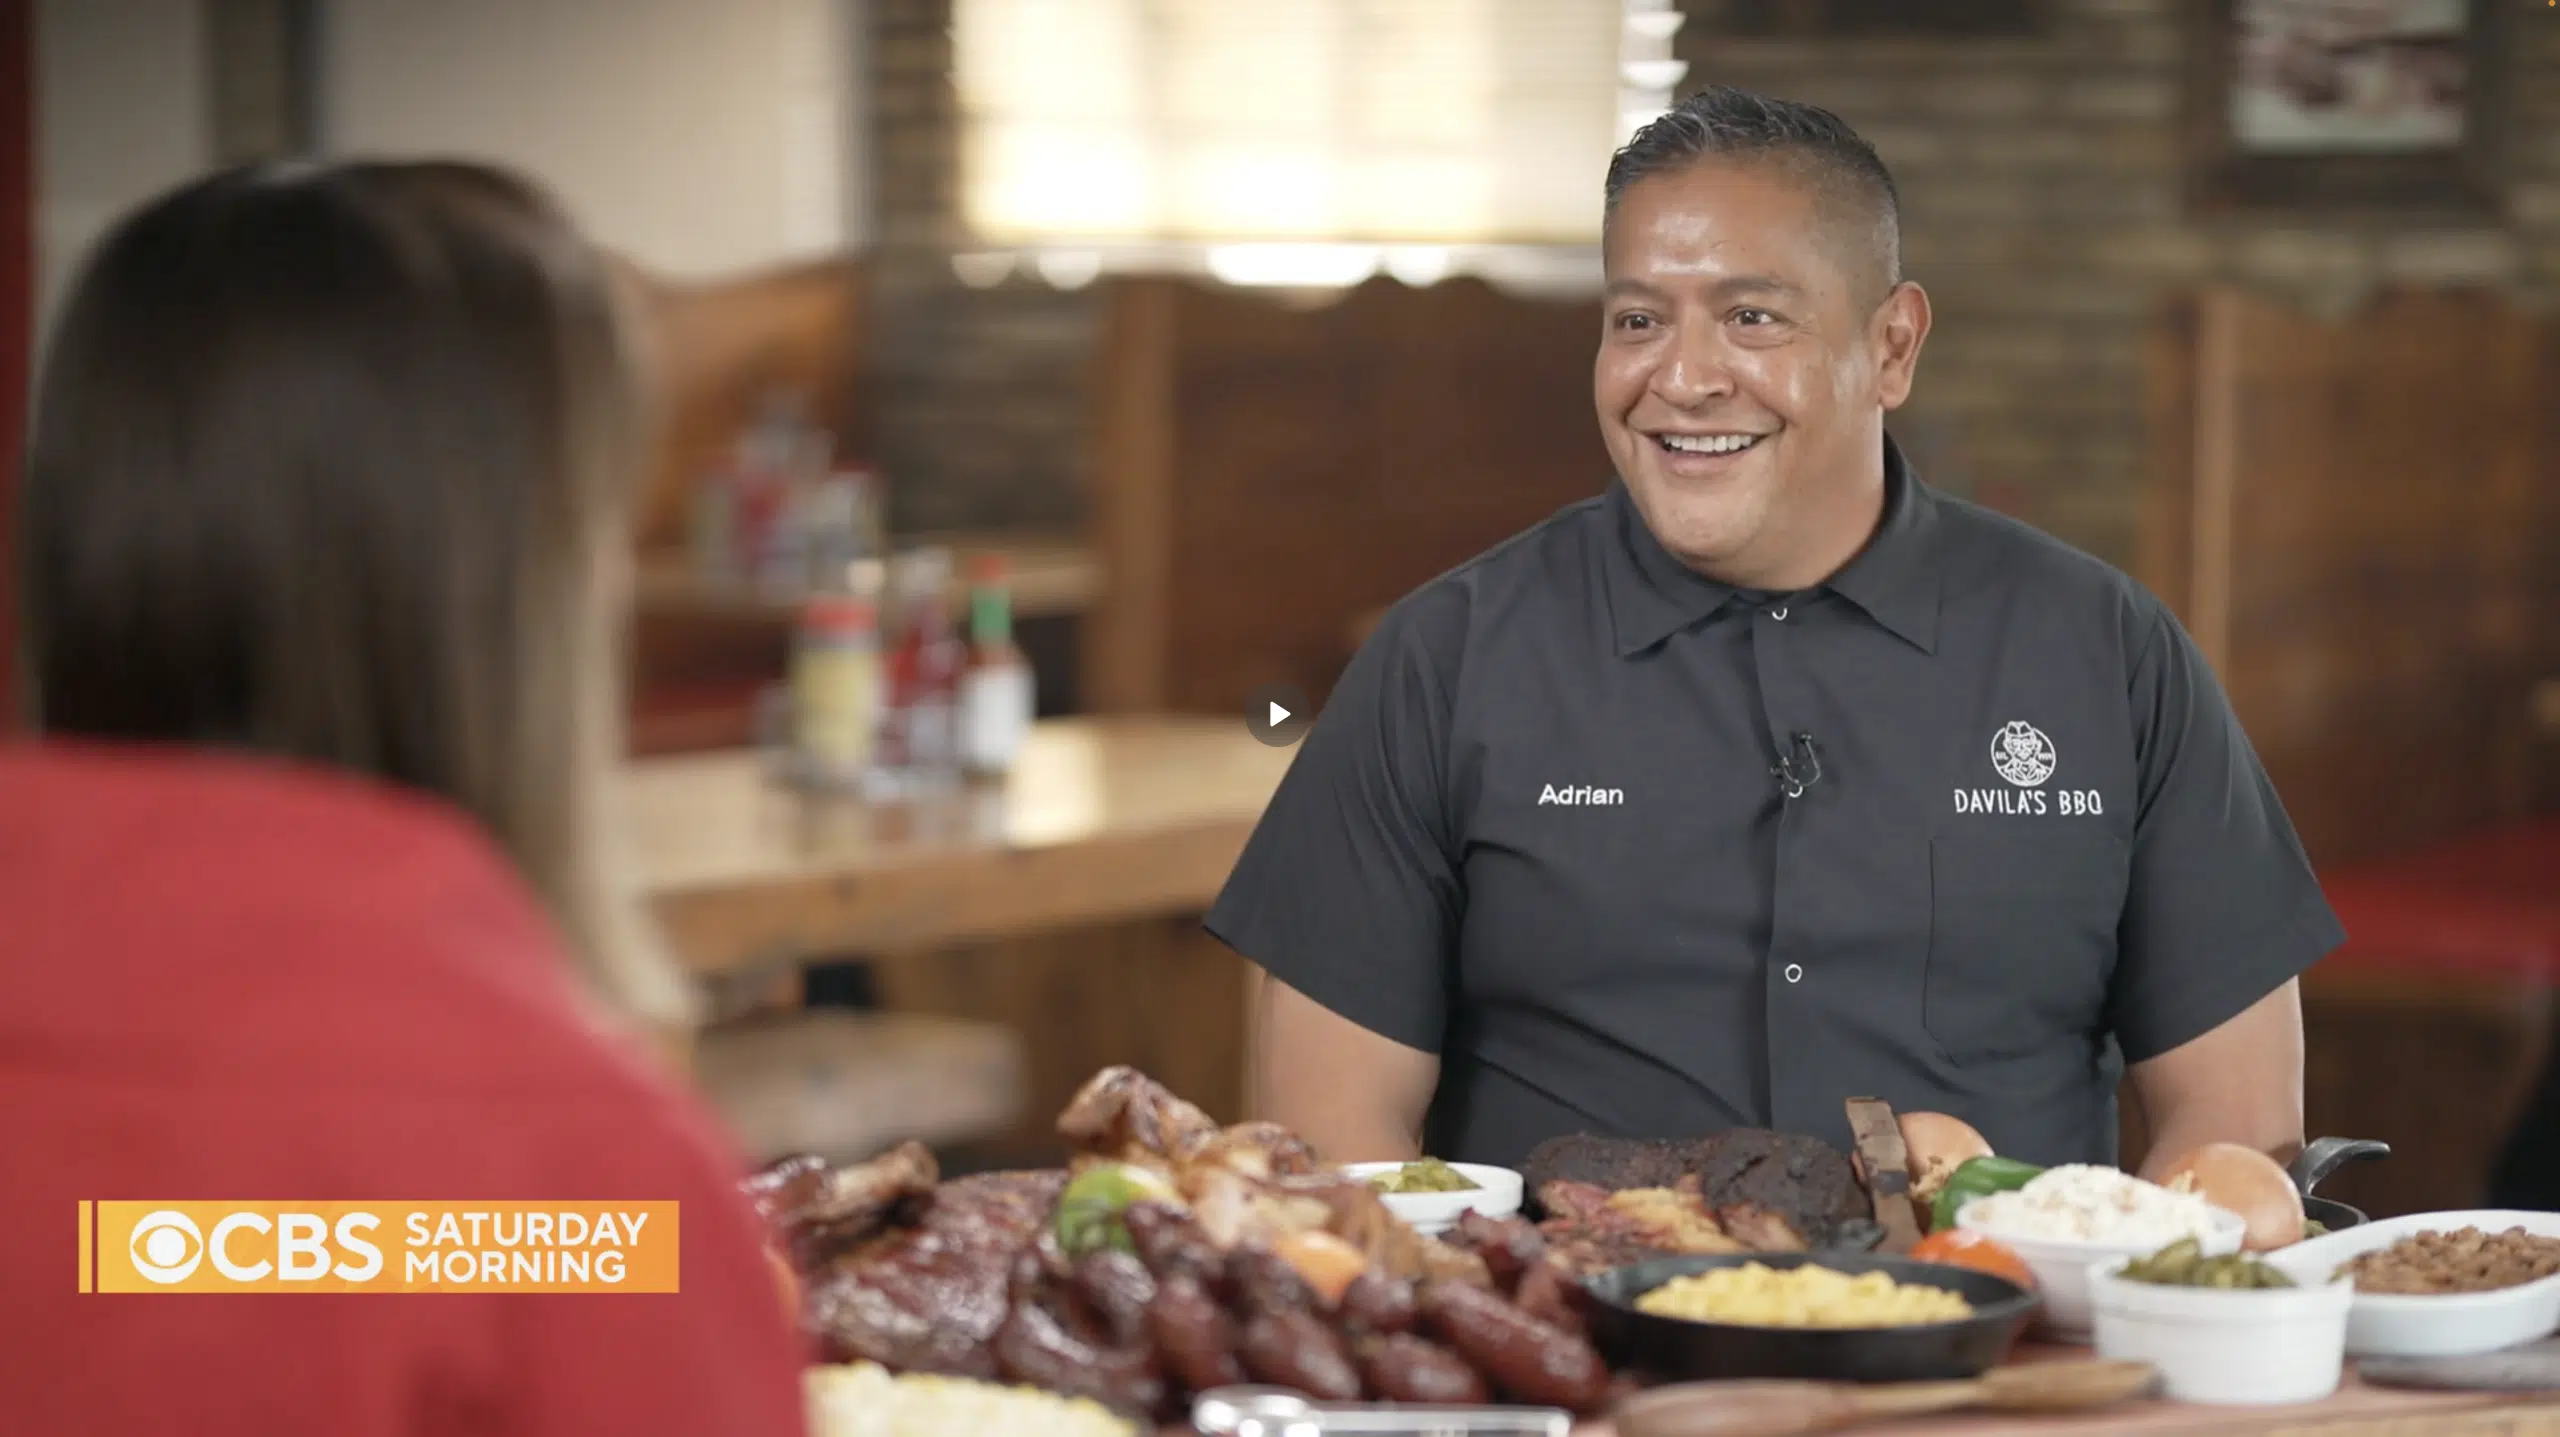 TV segment digs deeper into Davila's BBQ family history